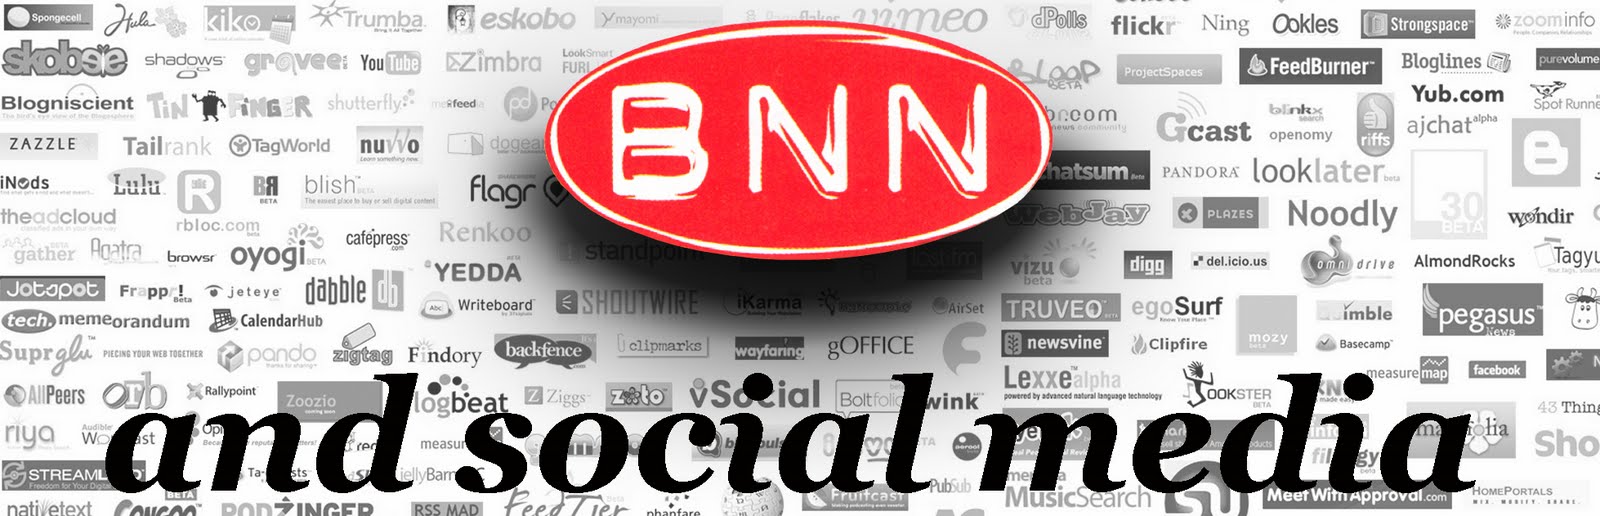 Bnn Logo